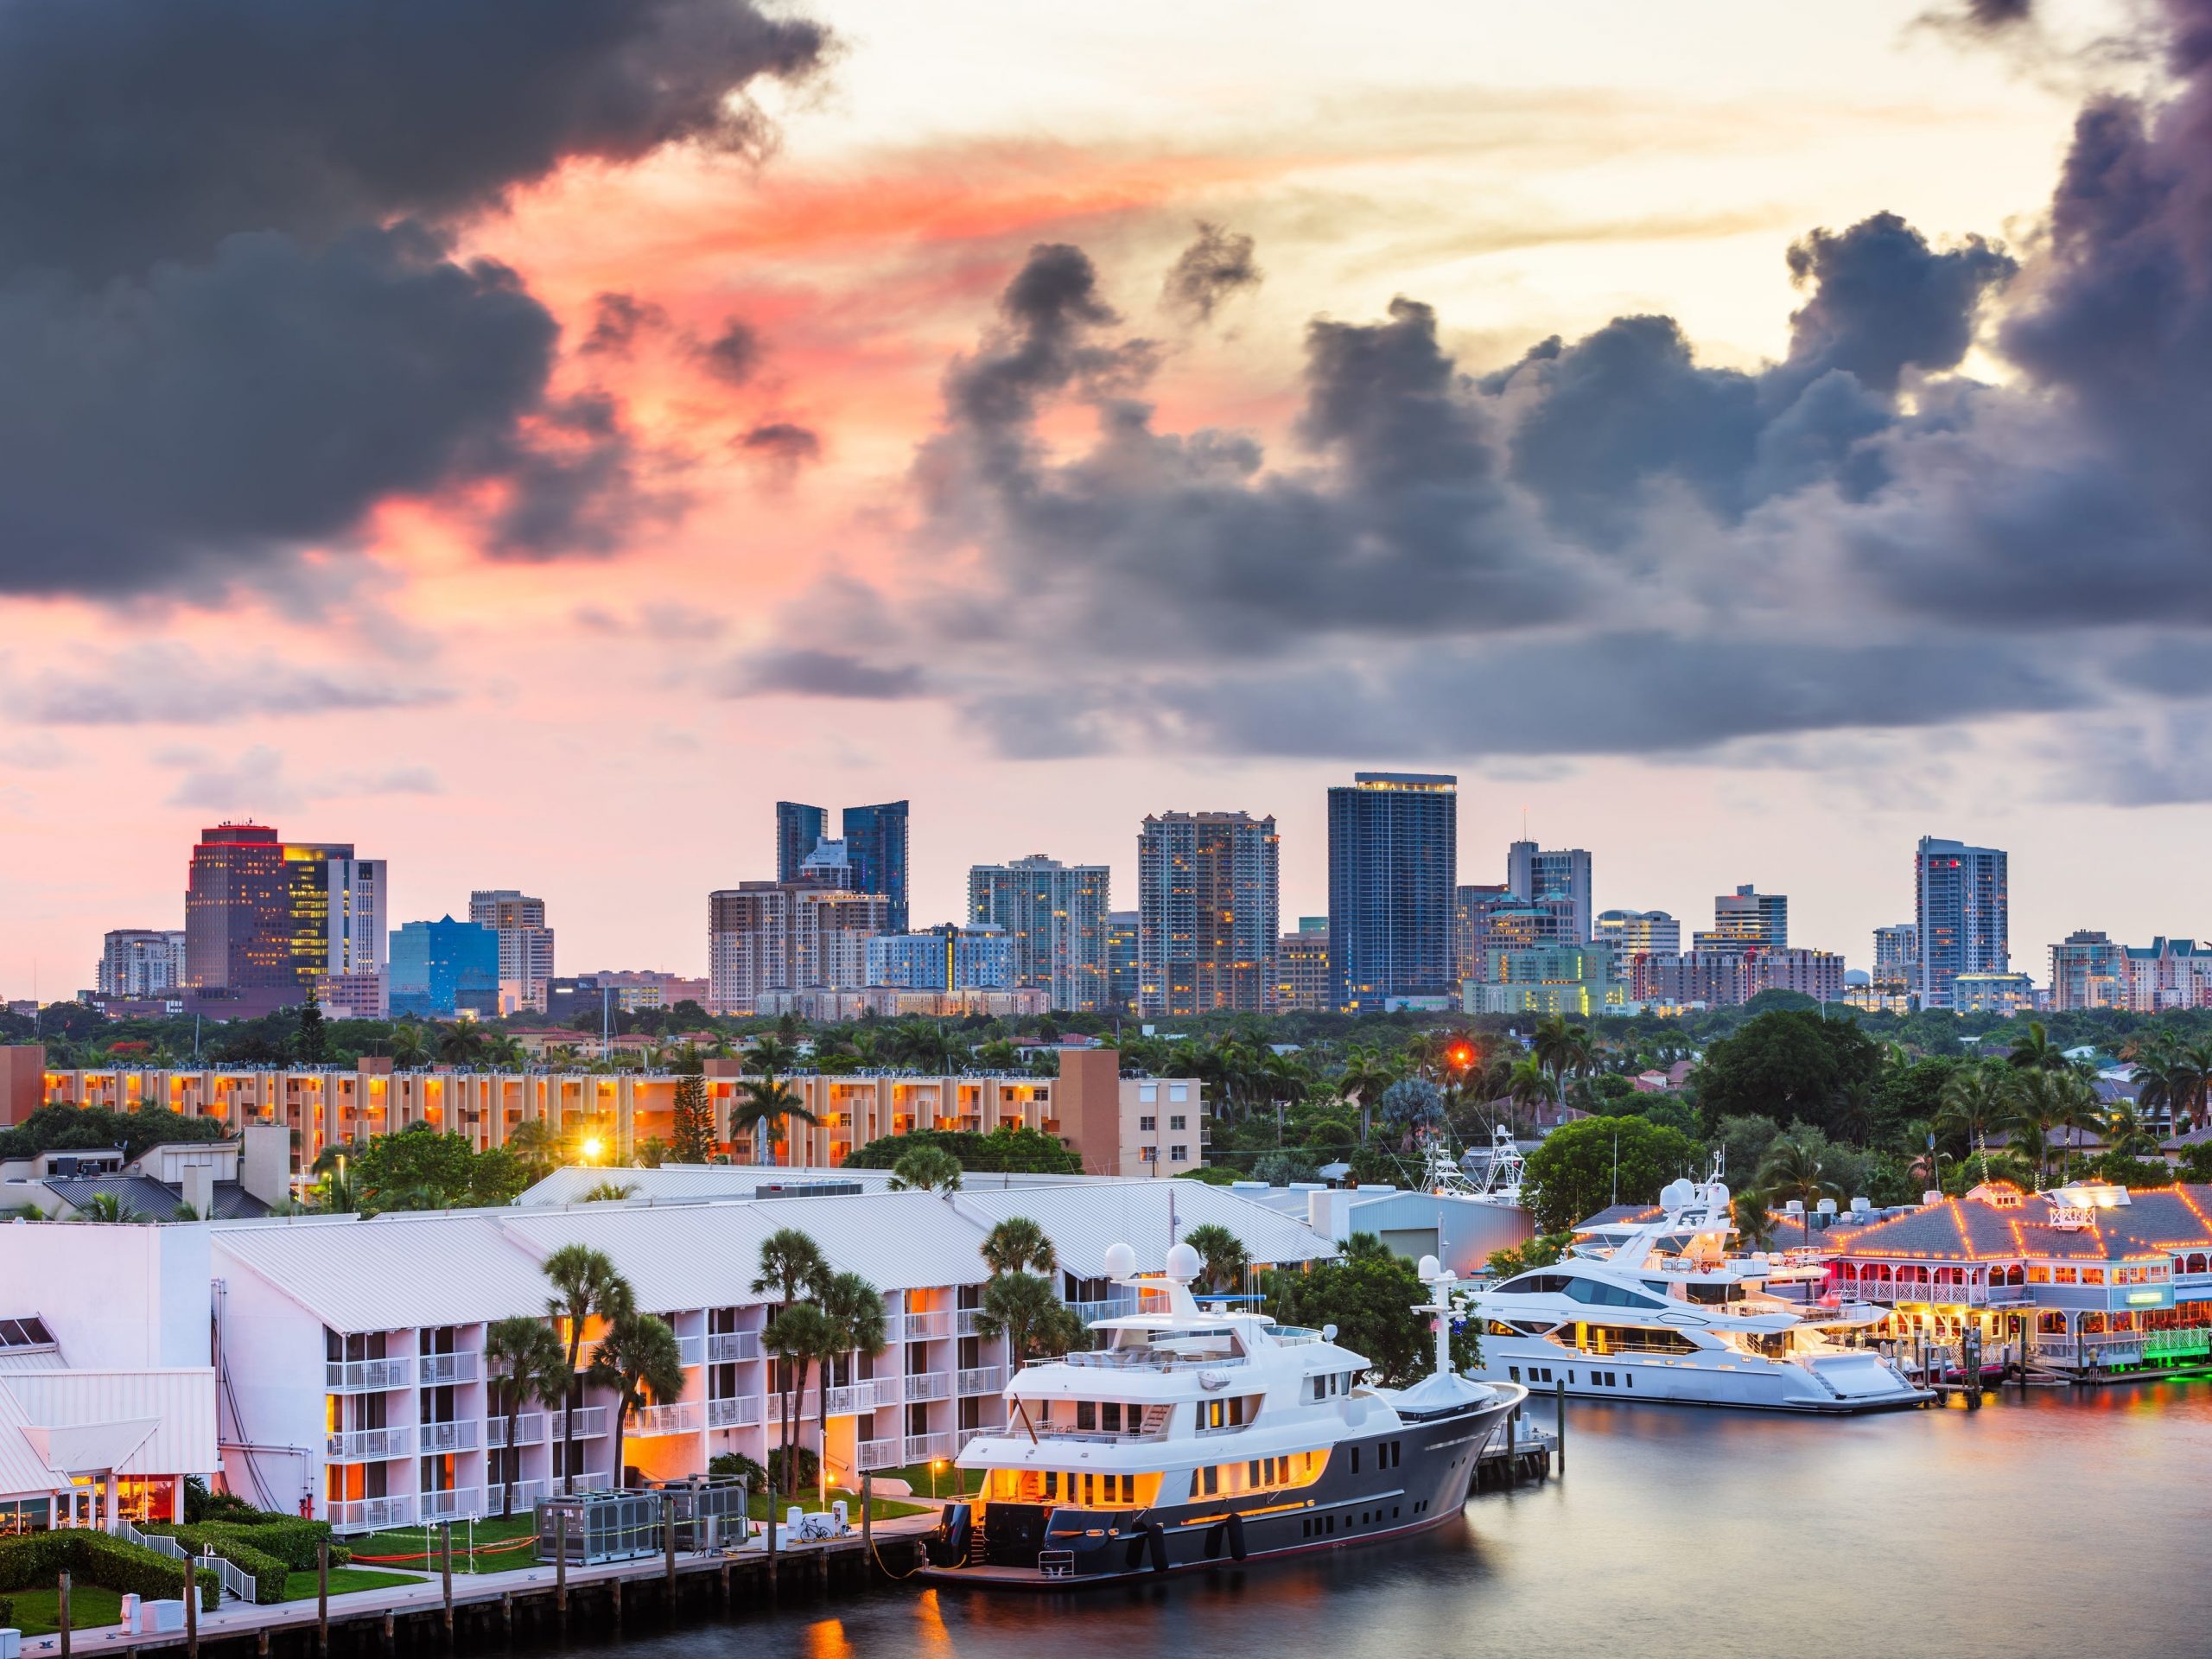 Sunset over Fort Lauderdale, Florida